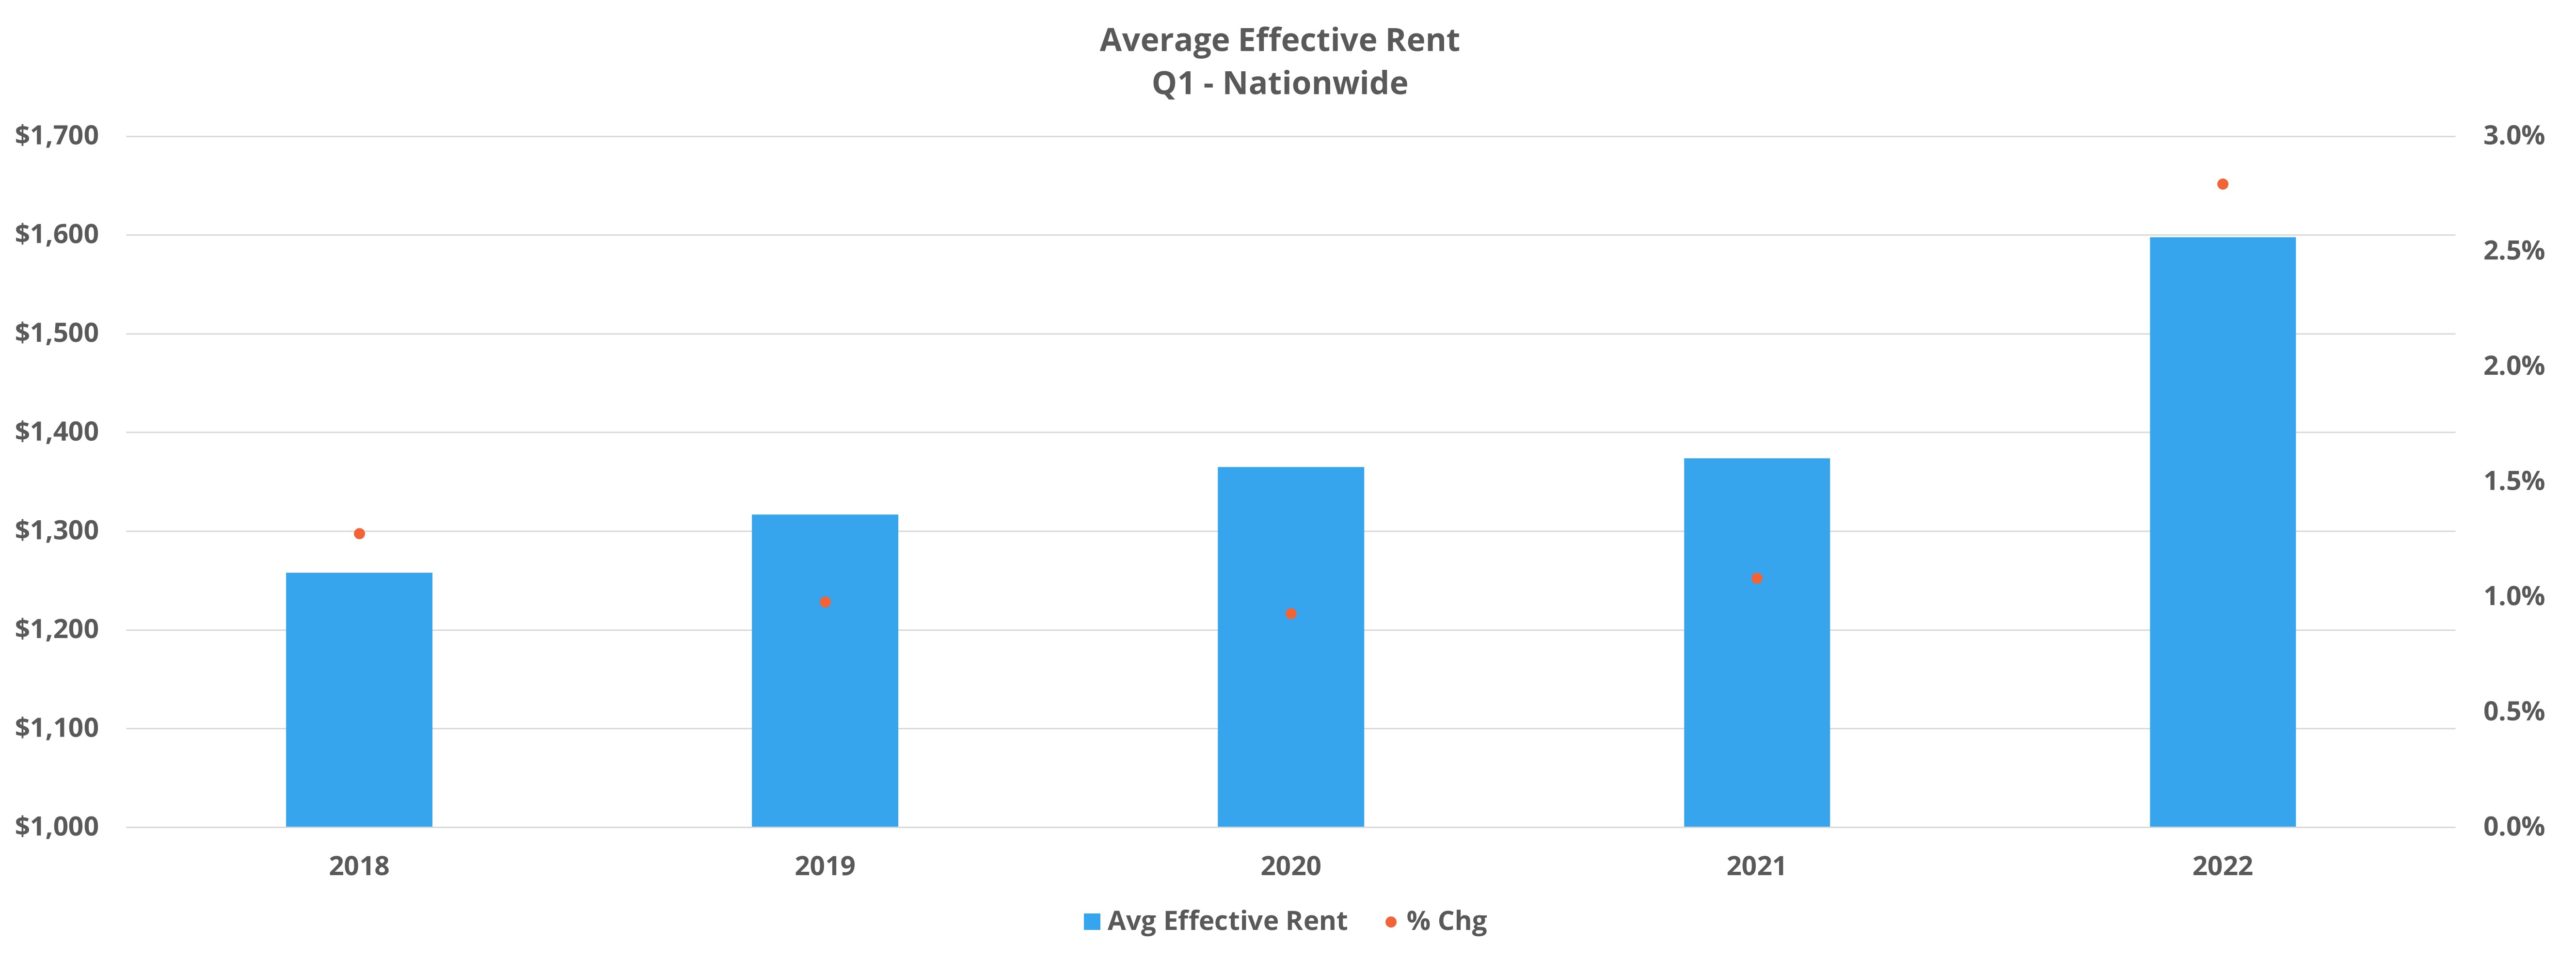 Average Effective Rent